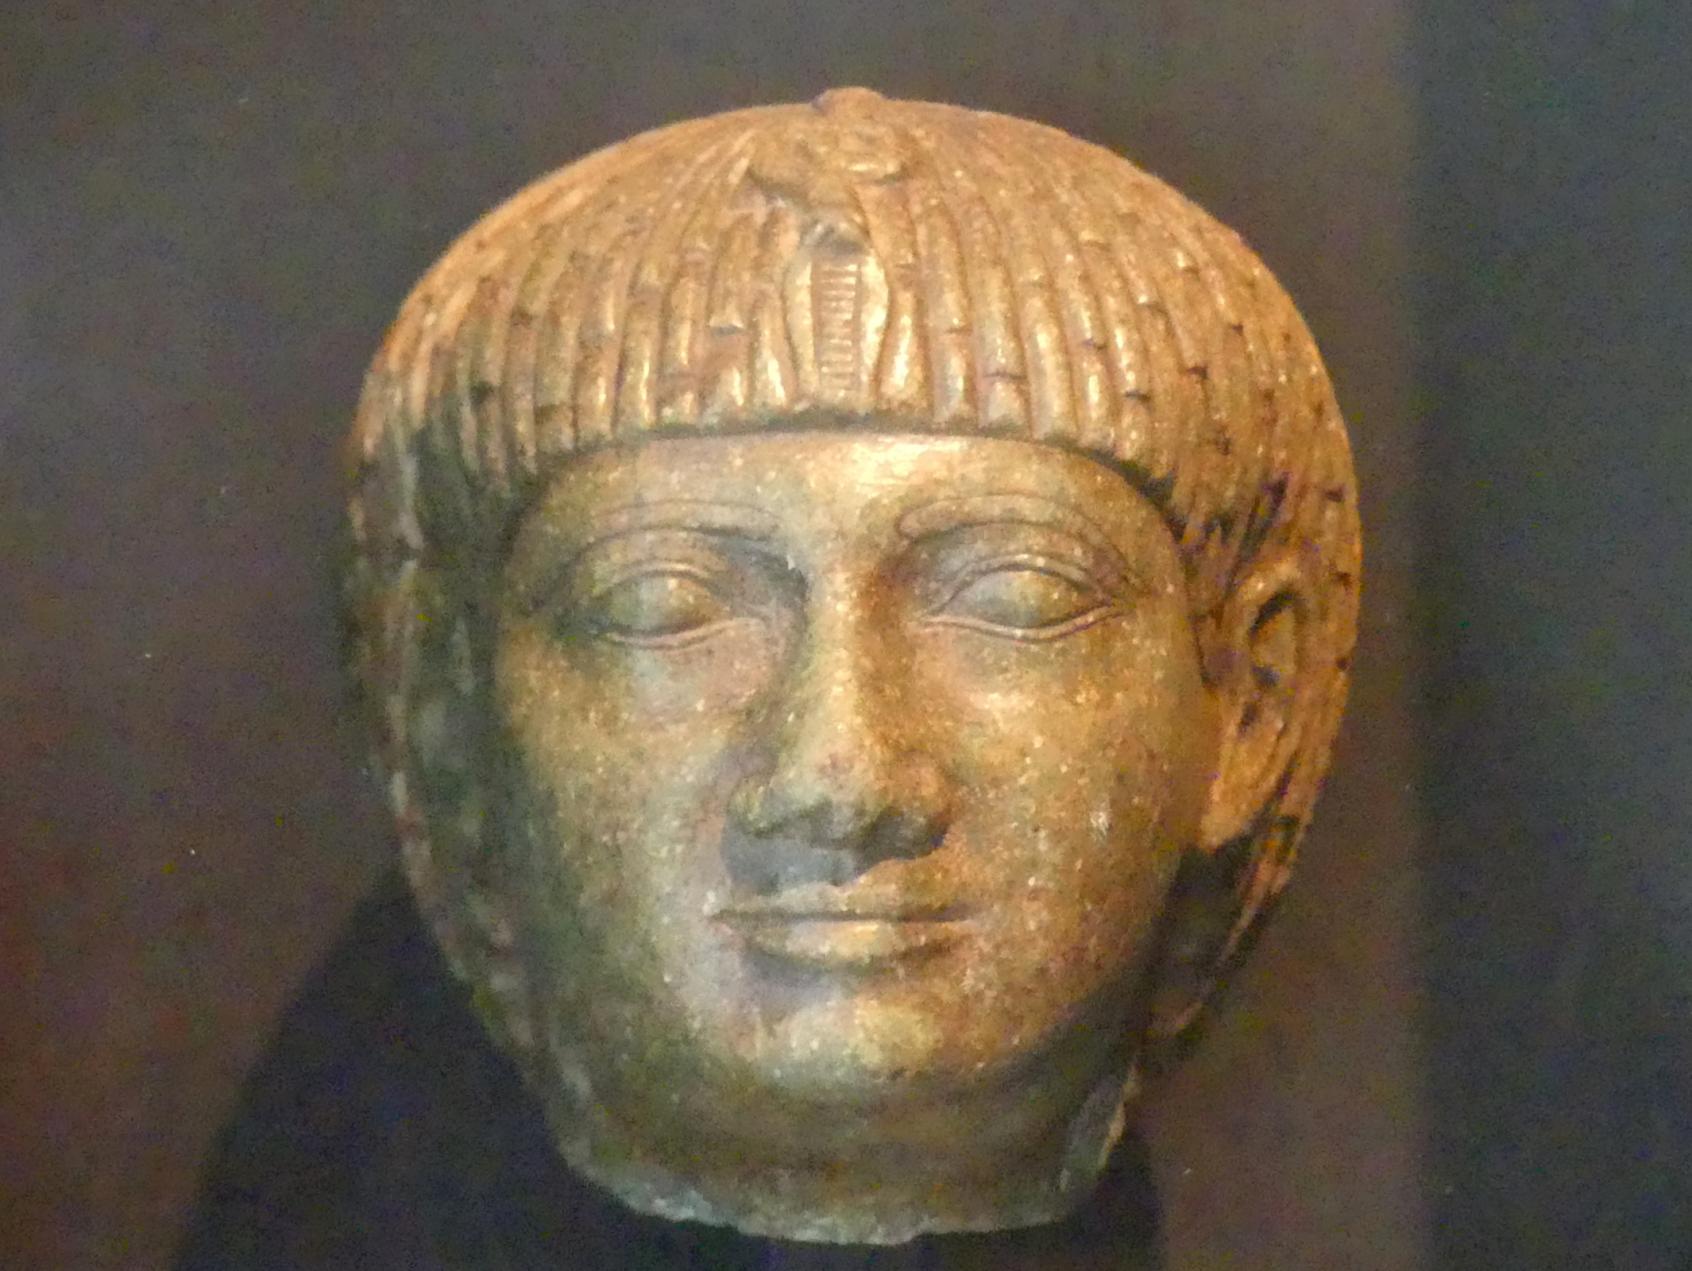 Kopf einer Statue des Pharao Osorkon I., 22. Dynastie, Undatiert, 900 v. Chr.